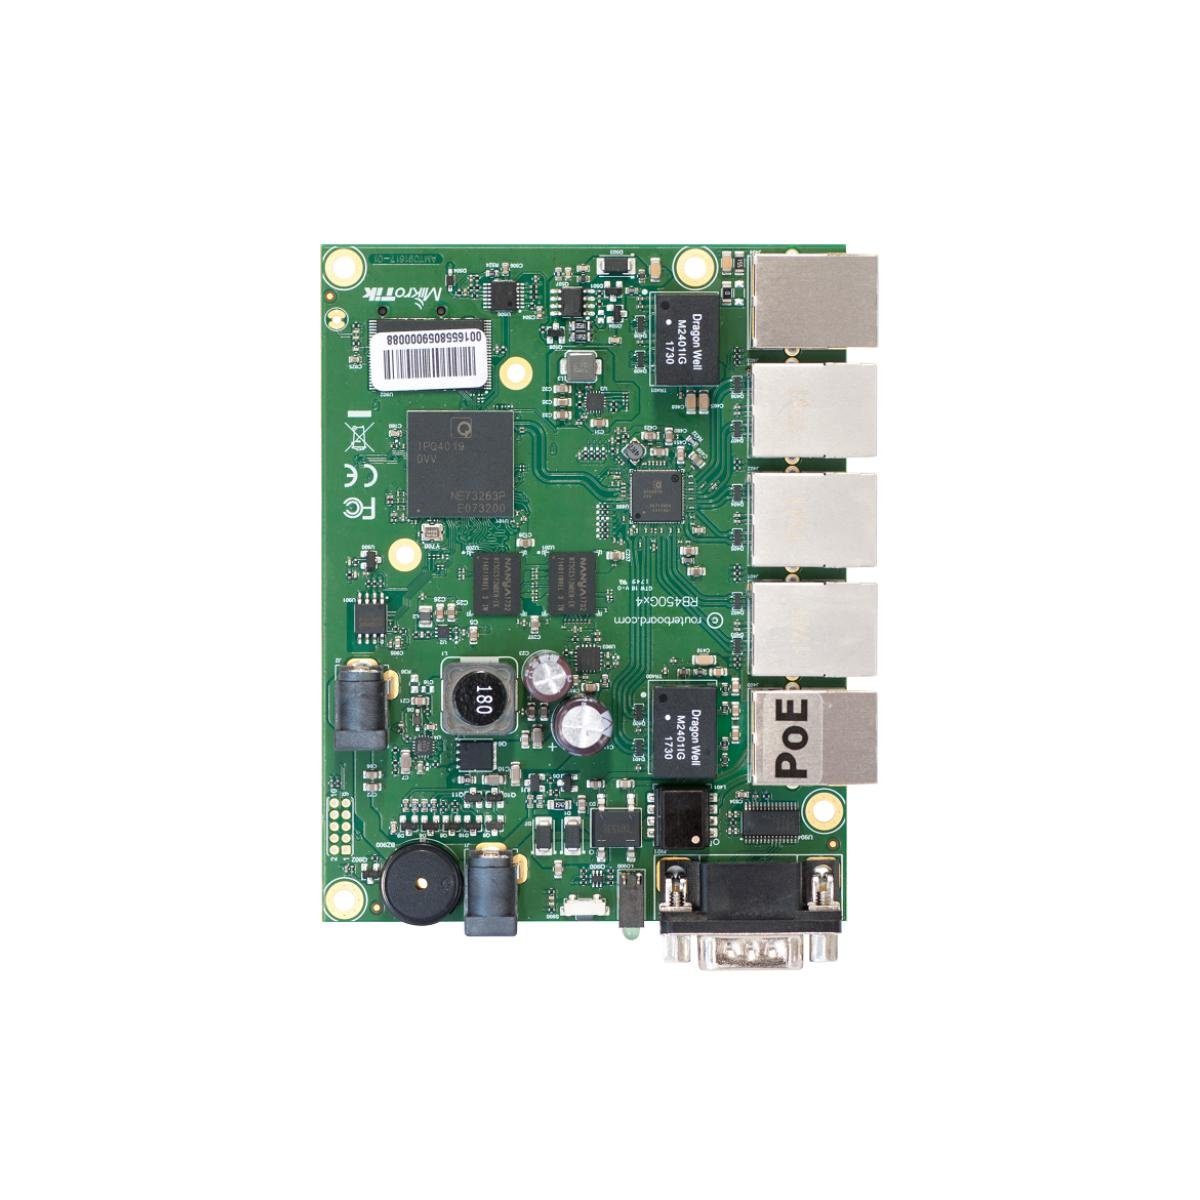 MikroTik RB450GX4 - RouterBOARD 450Gx4 mit Quad-Core 716 MHz CPU,... Netzwerk-Switch